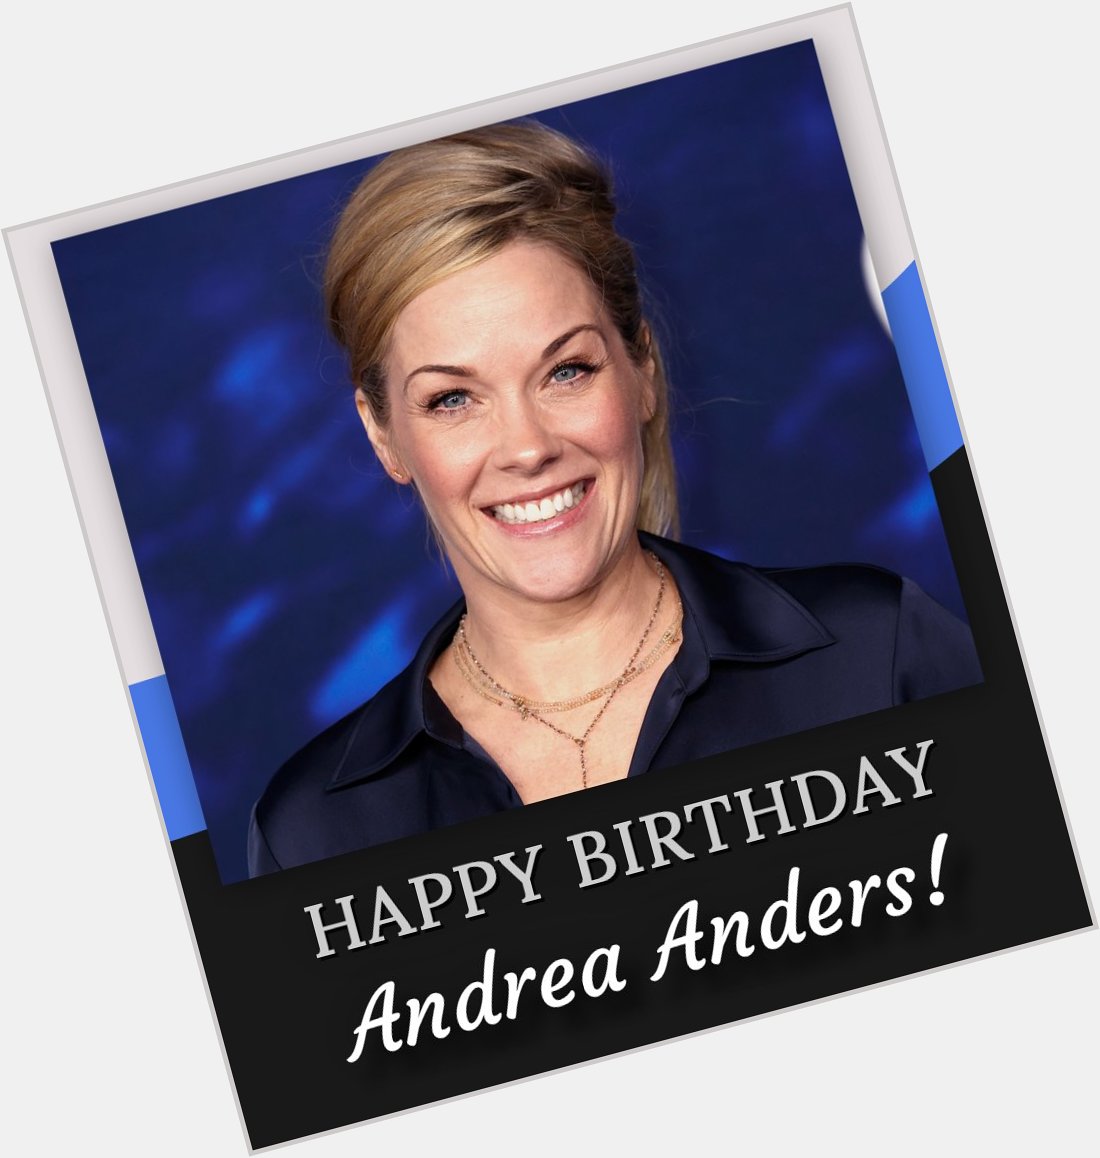 Happy birthday, Andrea Anders! 